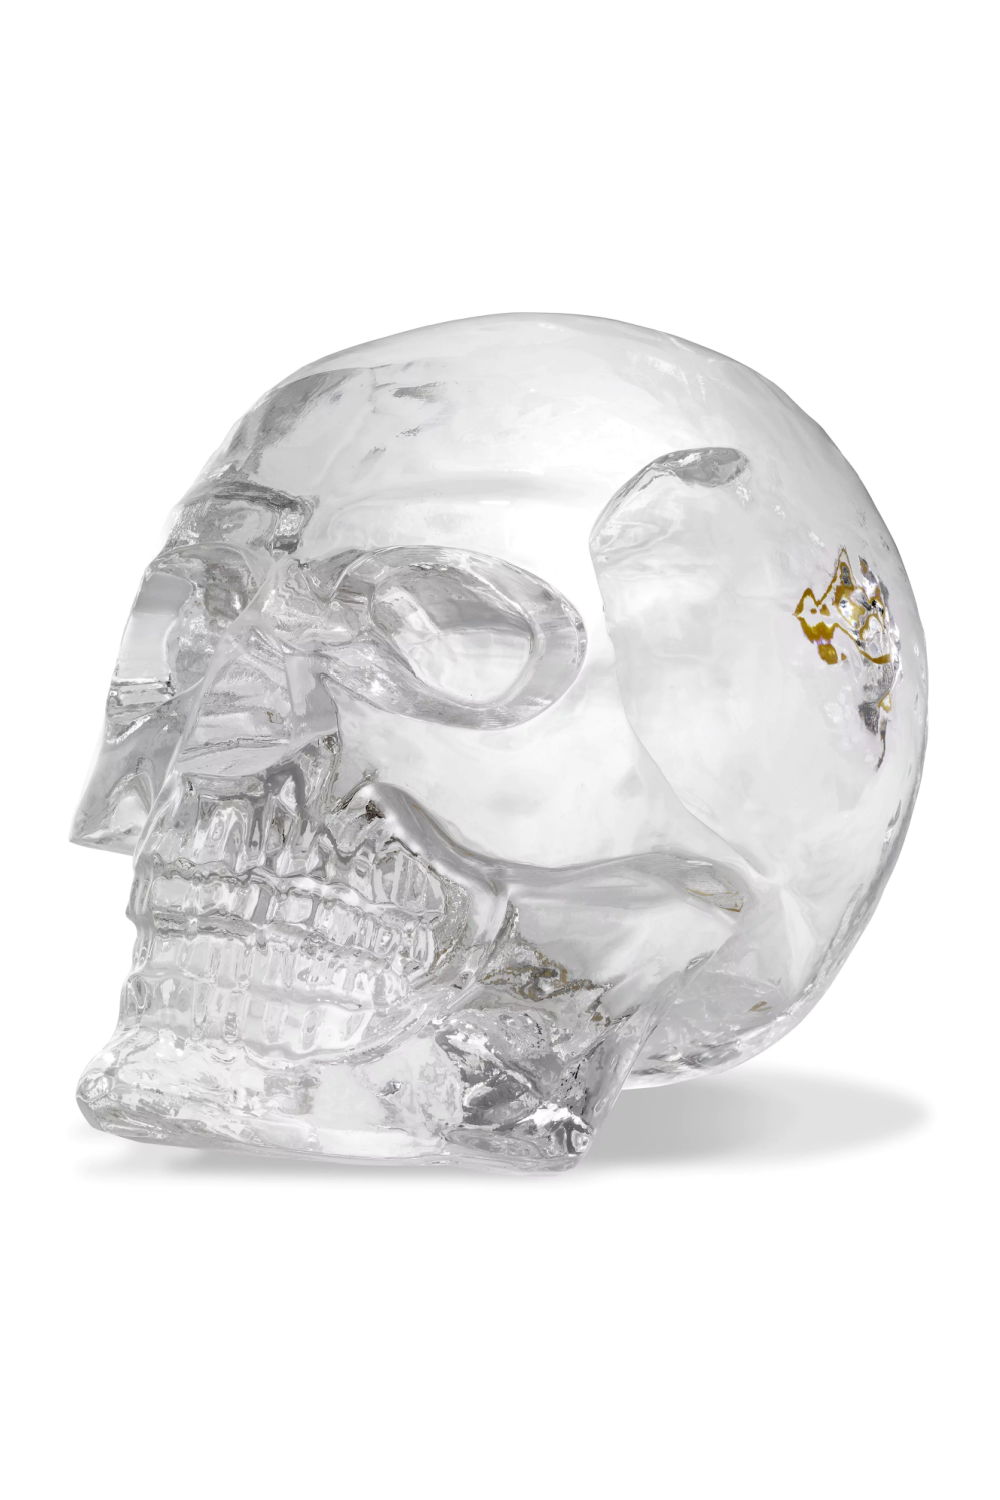 Maximalist Glass Sculpture | Philipp Plein Diamond Skull | Oroa.com